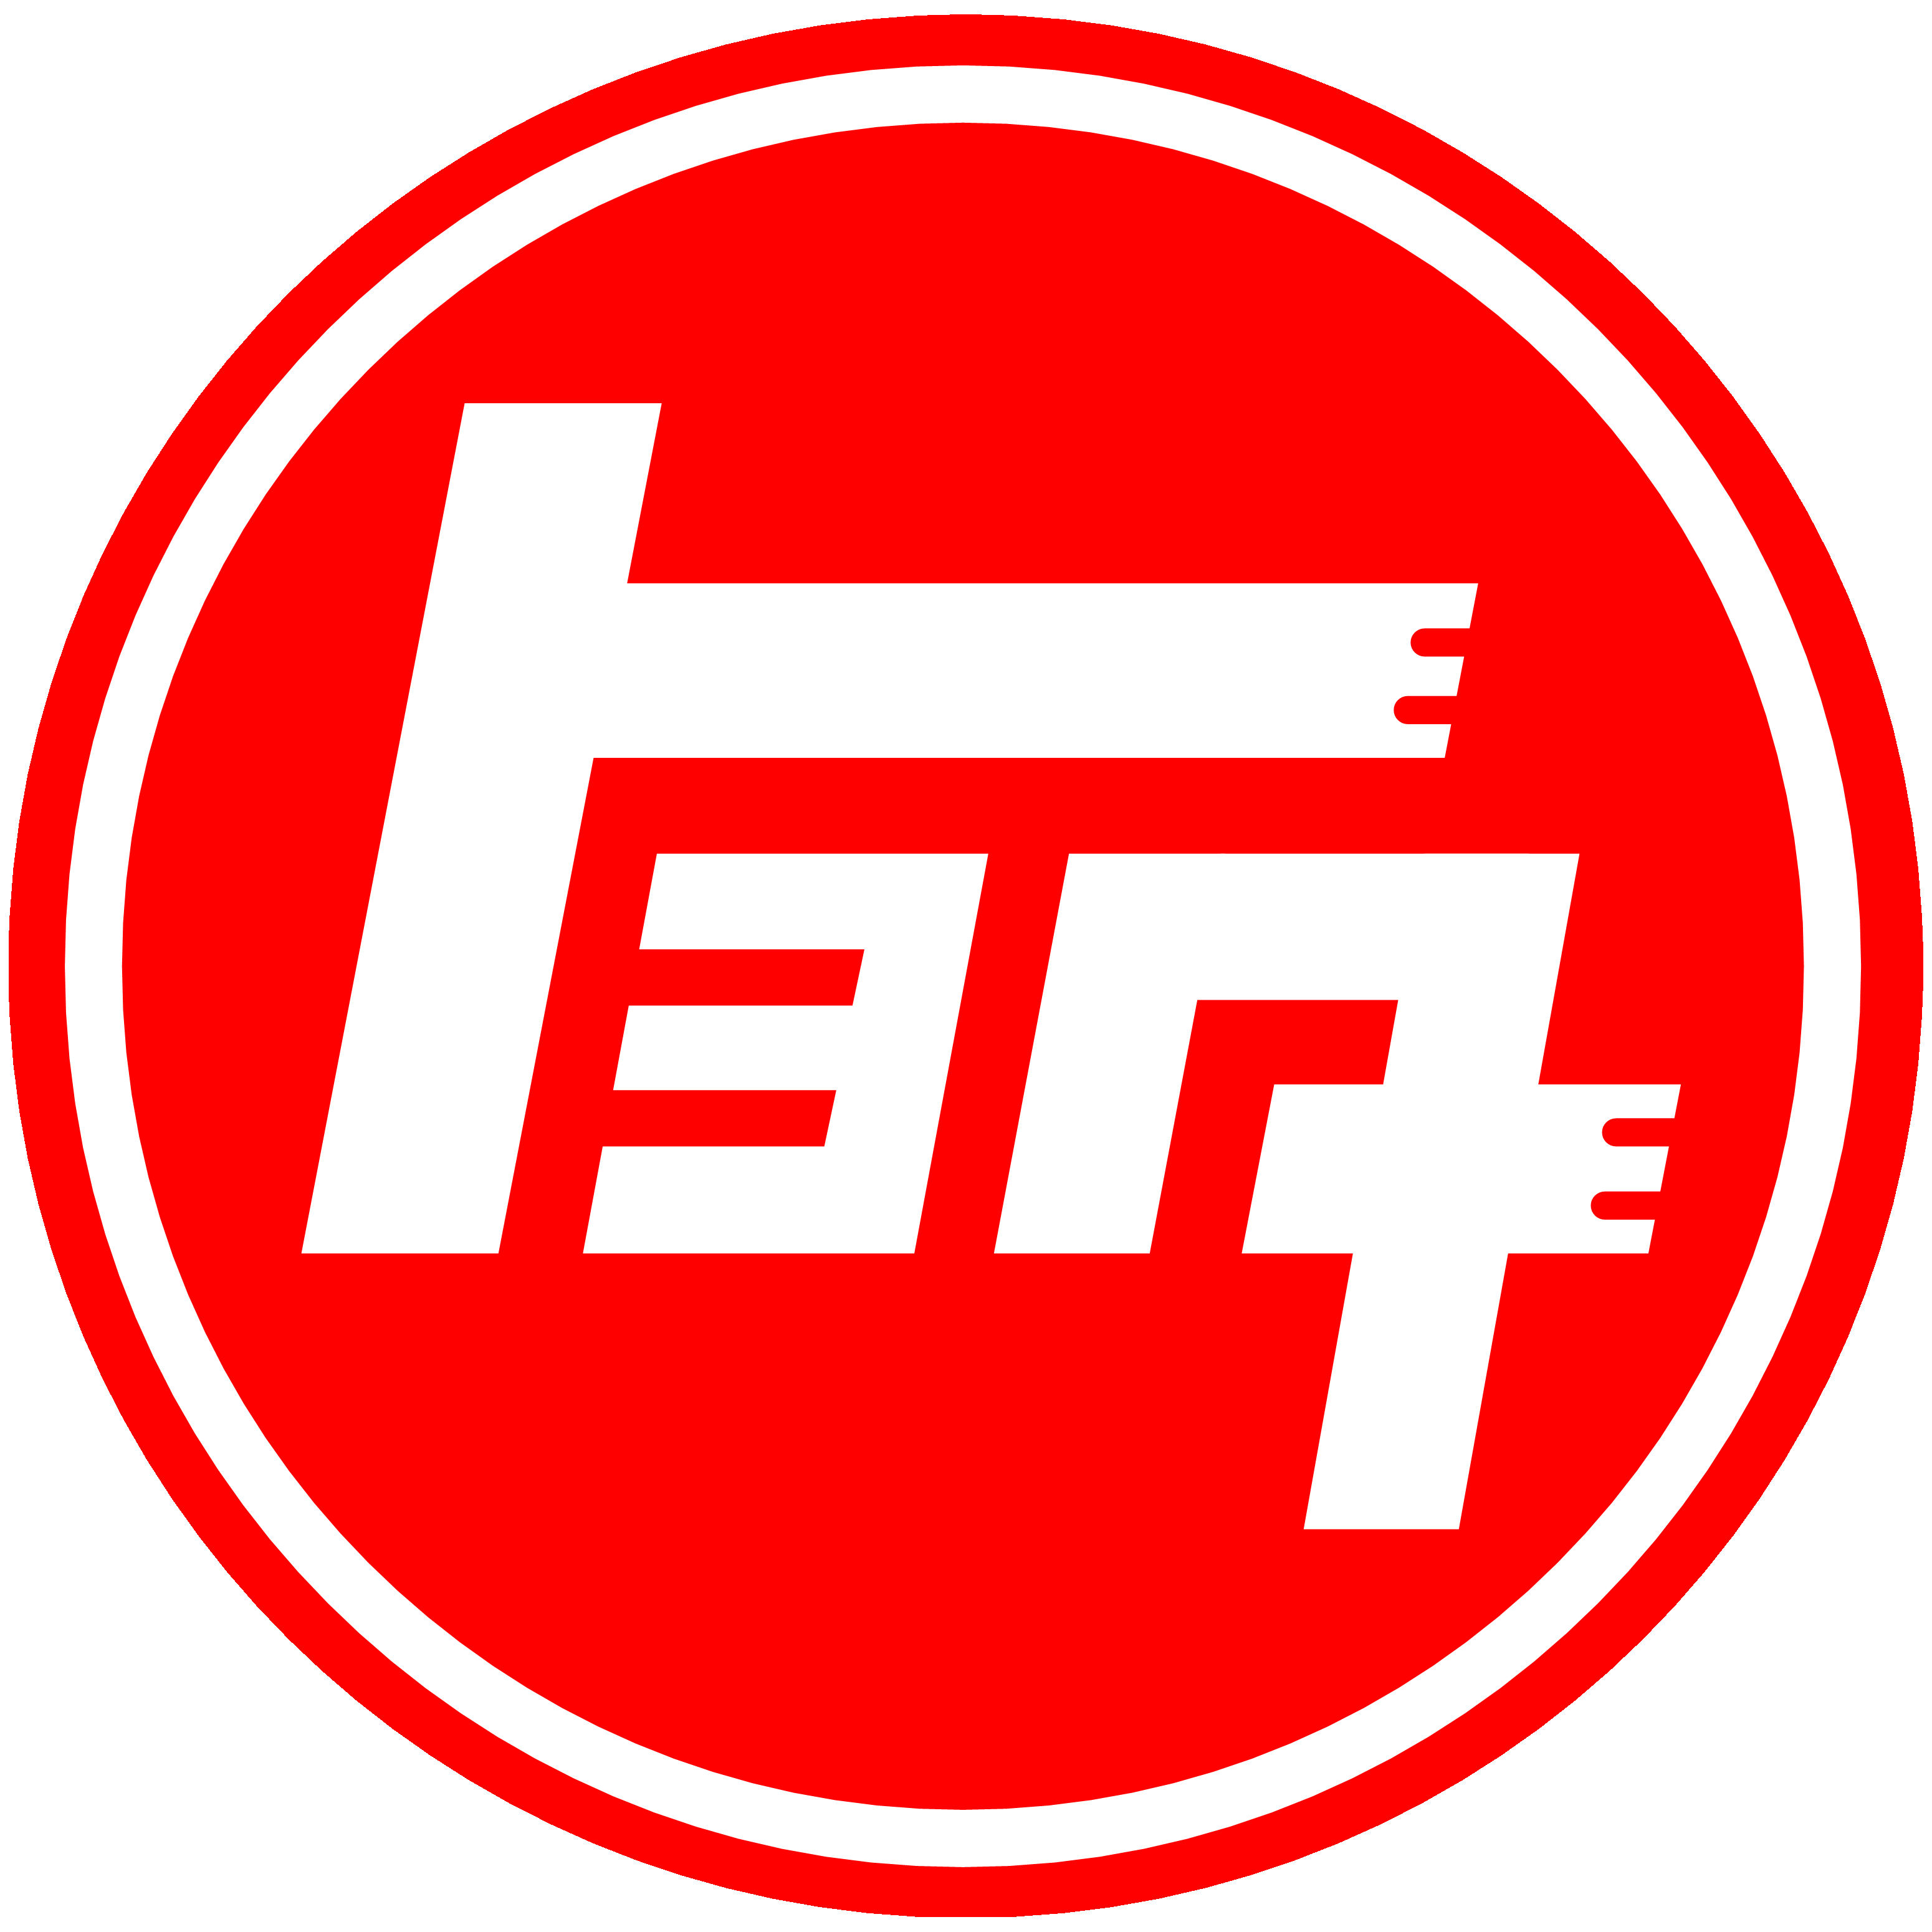 AE86 Toyota Logo - Automobile Logos. Cars, Toyota cars, Logos